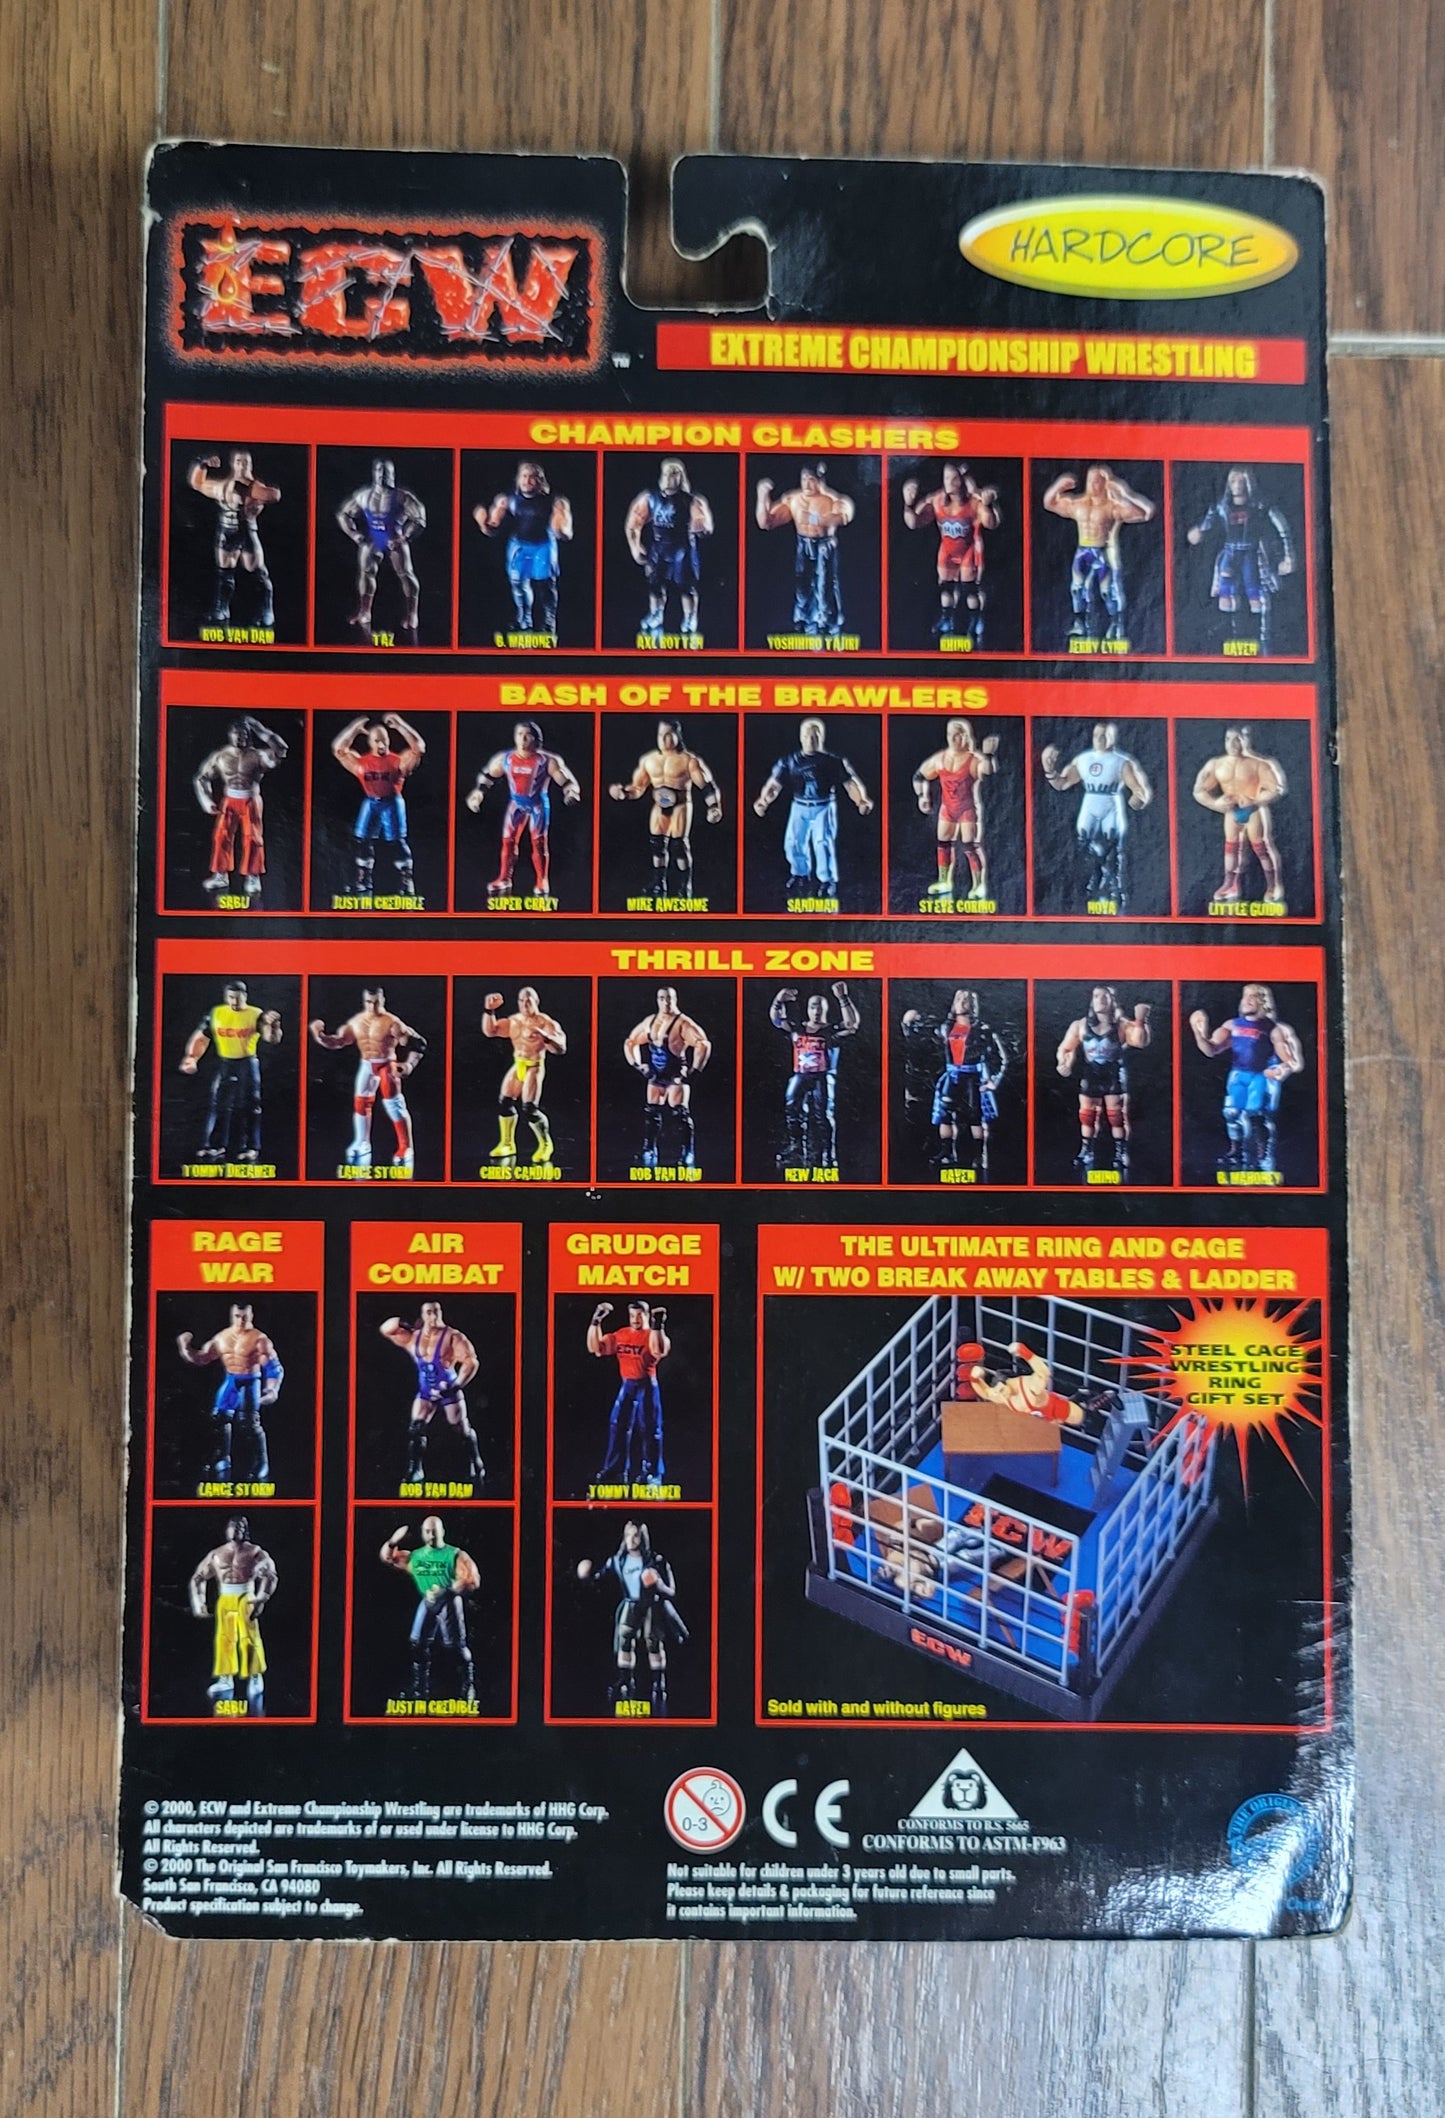 2000 Toy Makers ECW Rob Van Dam Thrill Zone Hardcore Wrestling Action Figure